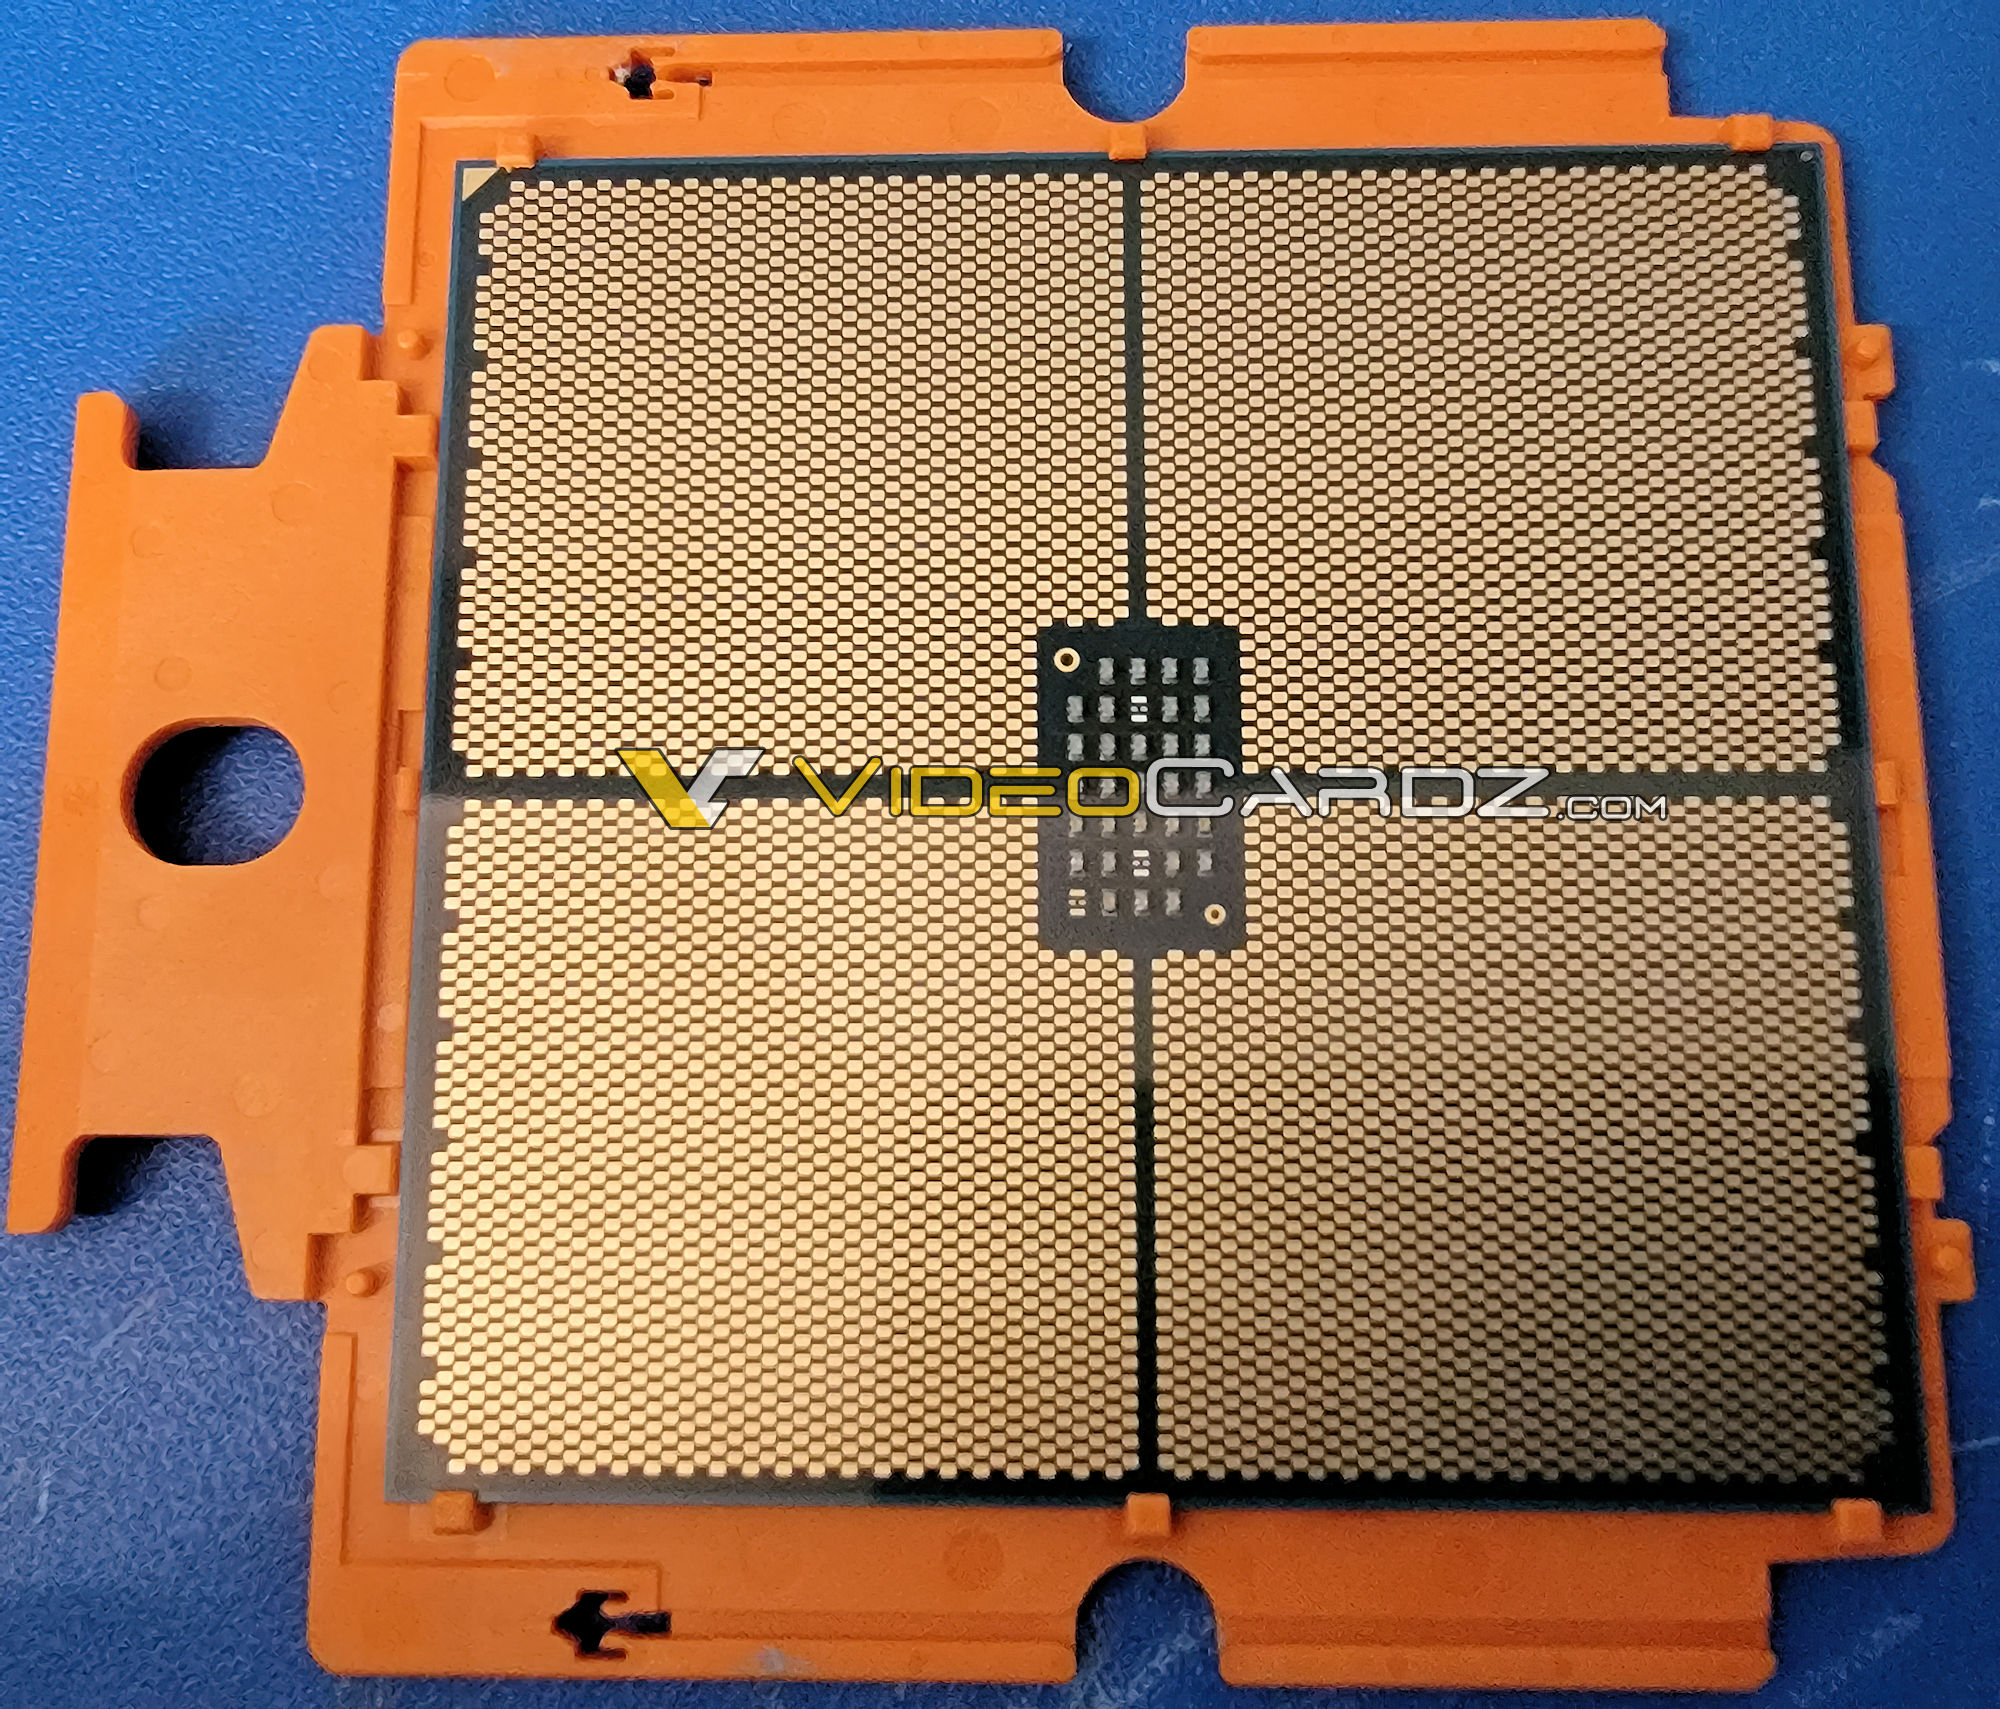 amd epyc genoa zen4 backside หลุดภาพซีพียู AMD EPYC รุ่นใหญ่สถาปัตย์ ZEN4 ขนาด 5nm รหัส “Genoa” รุ่นใหม่ล่าสุดรองรับแรม DDR5 และ PCIe Gen5  